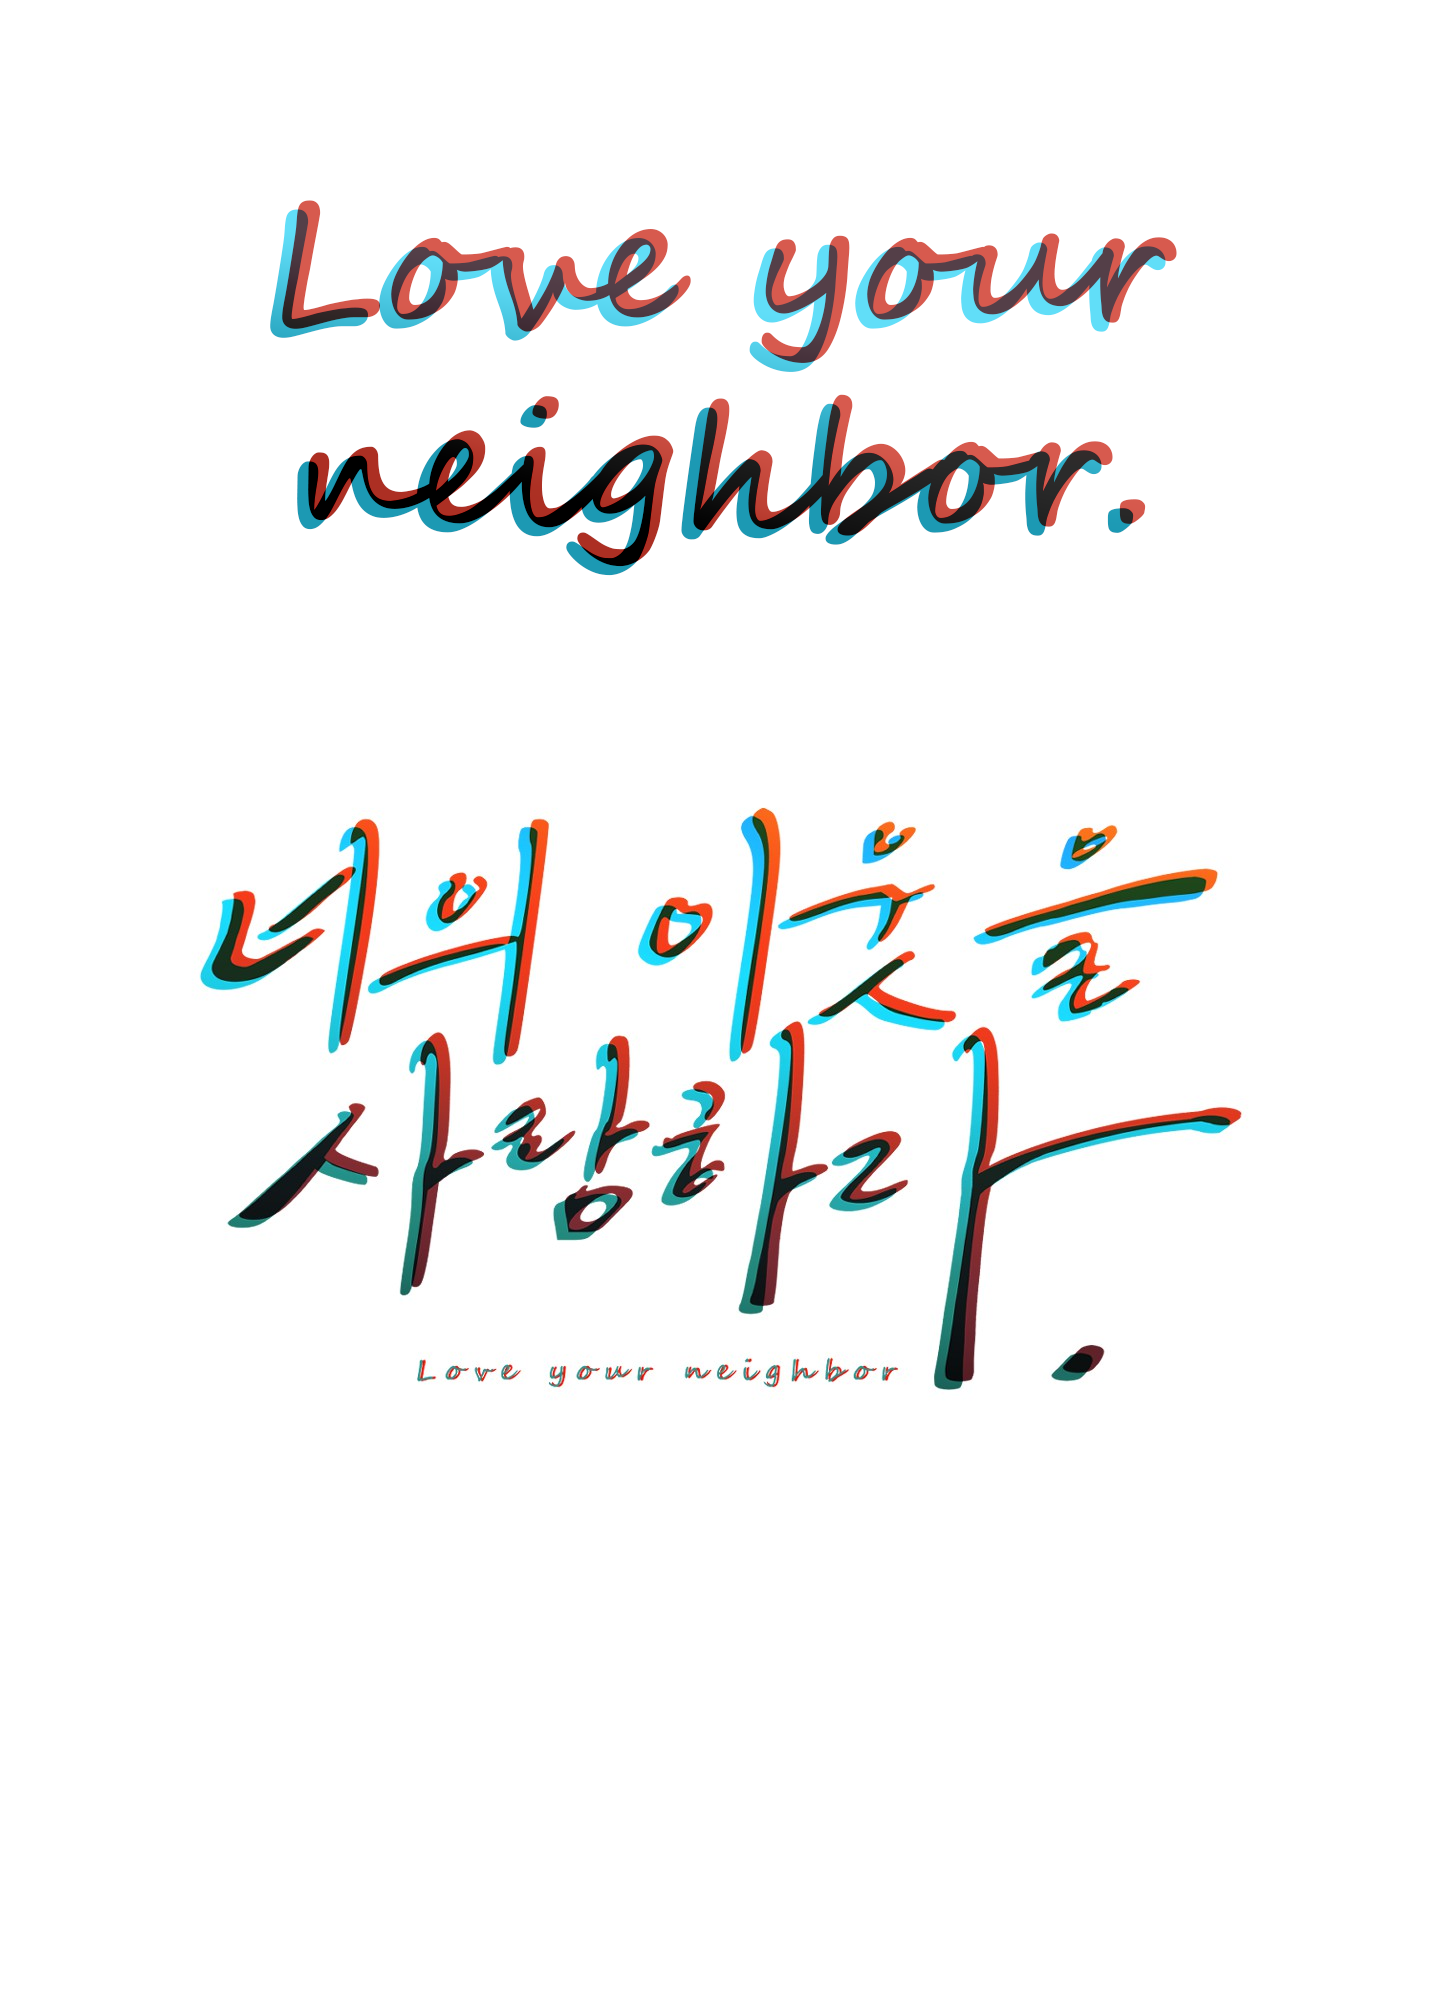 Love Thy Neighbor - Page 2